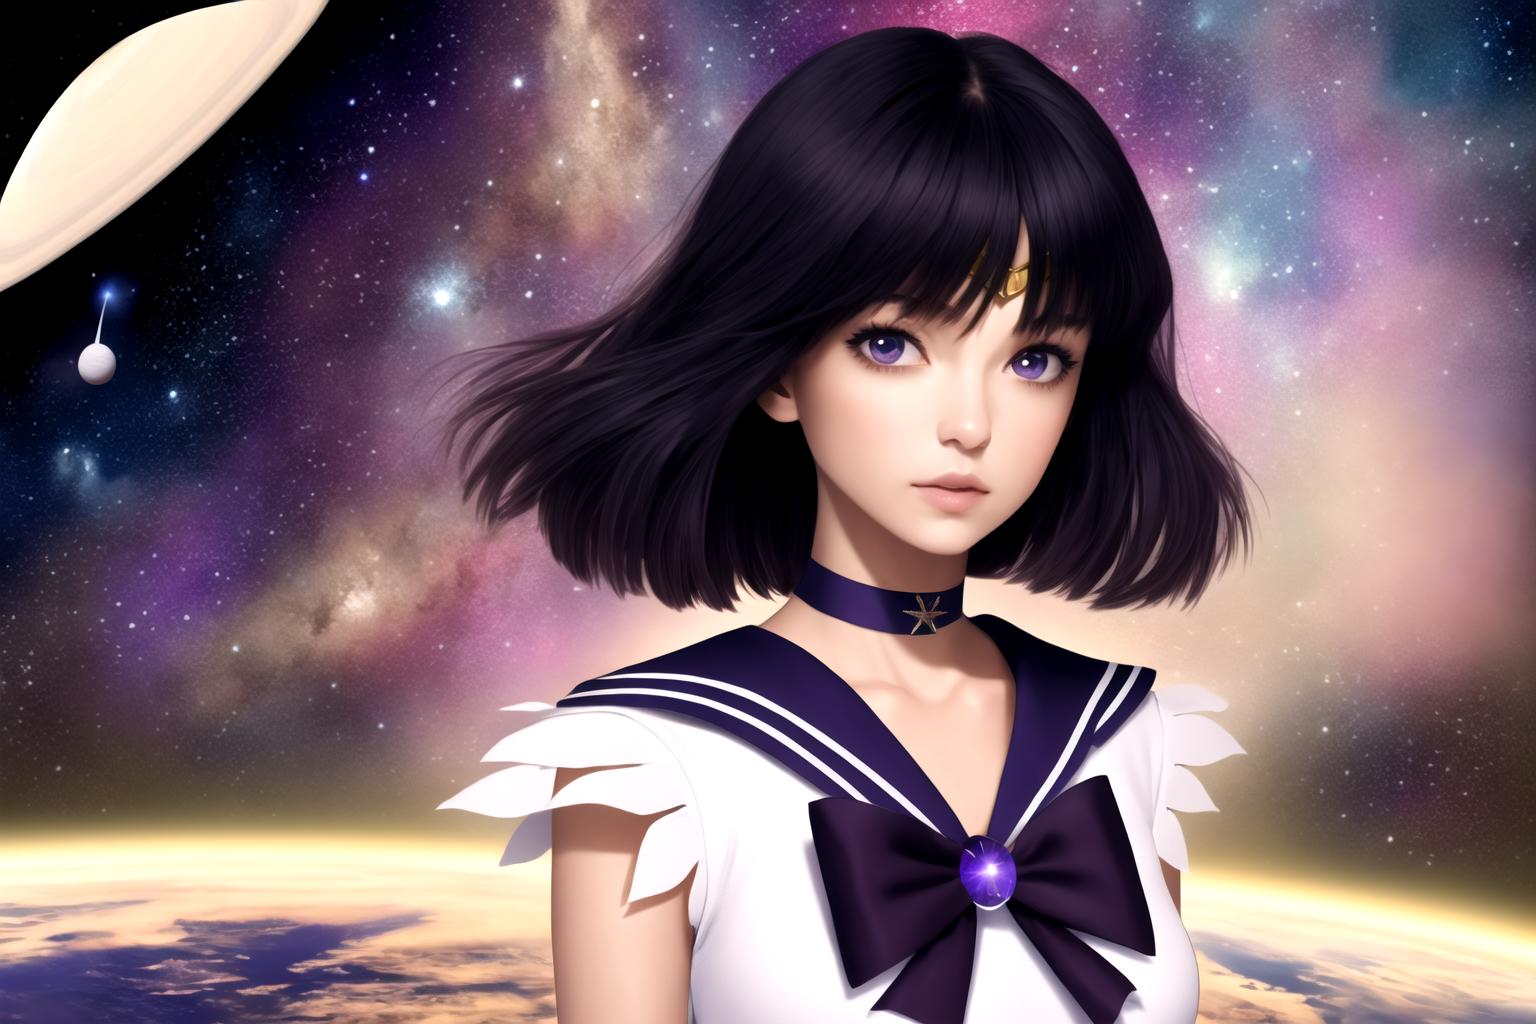 Hotaru Tomoe - Sailor Saturn - Character LORA image by Konan